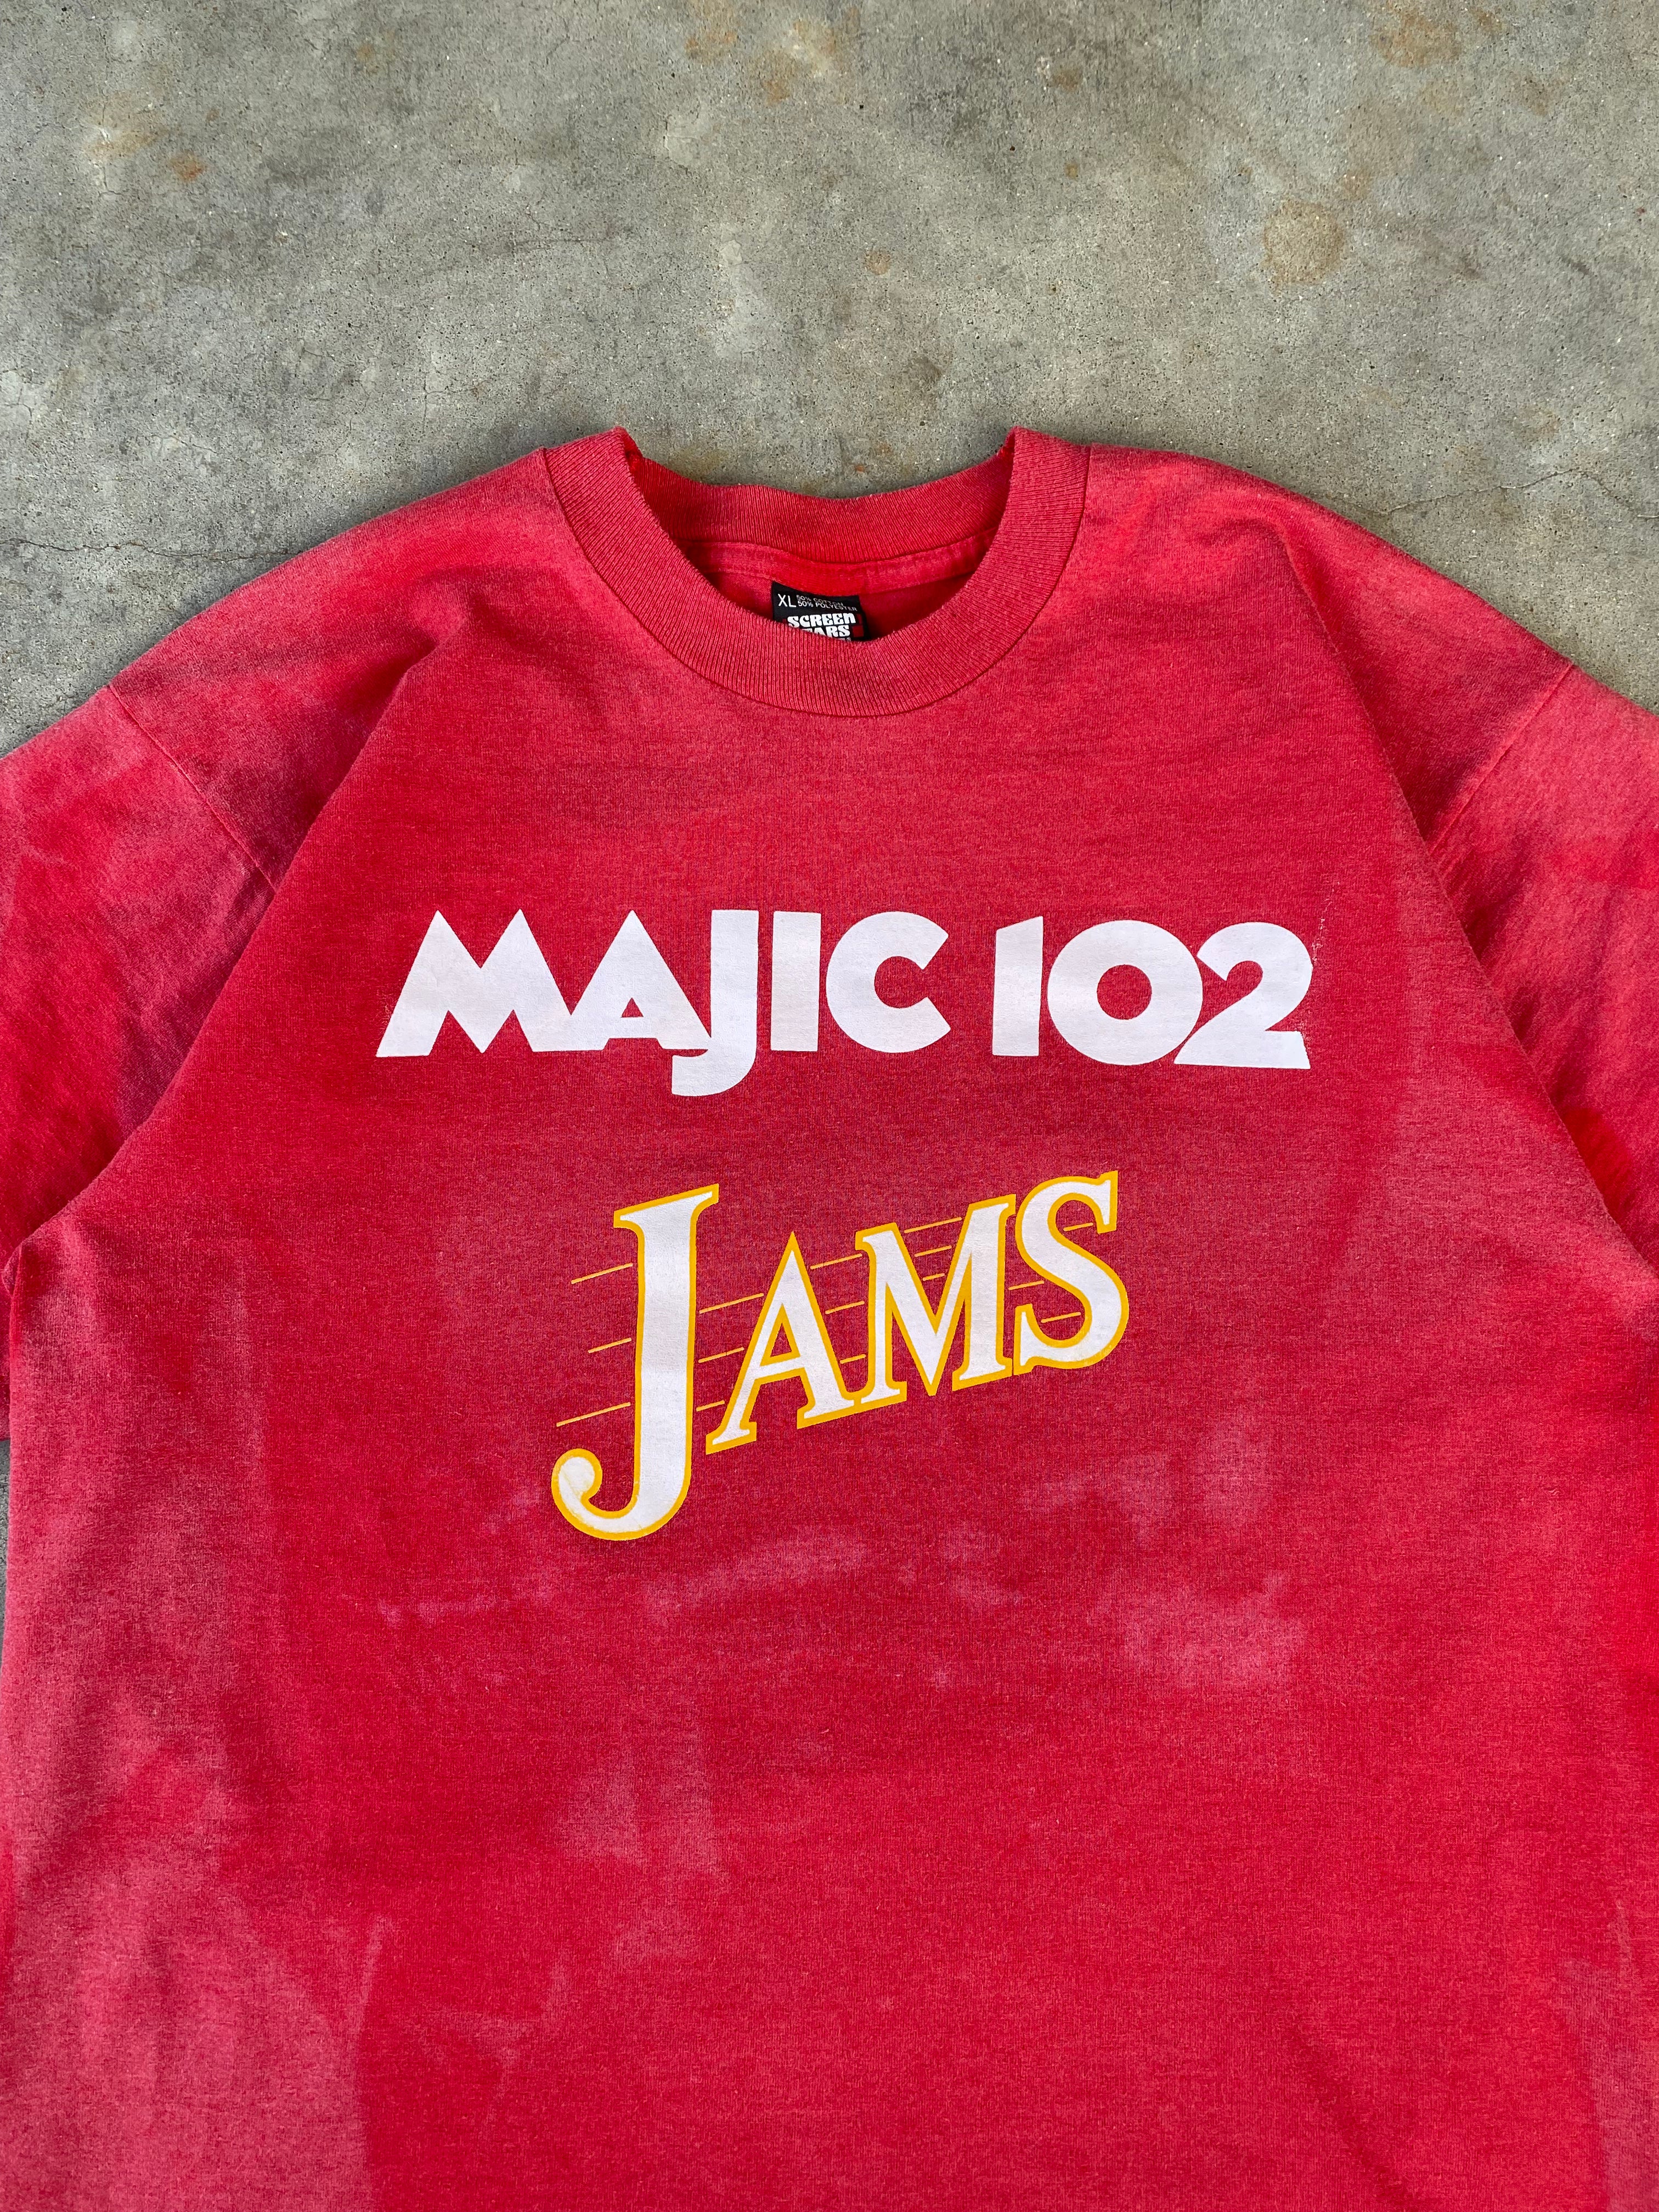 1990s Majic 102 Jams Sunfaded T-Shirt (L/XL)